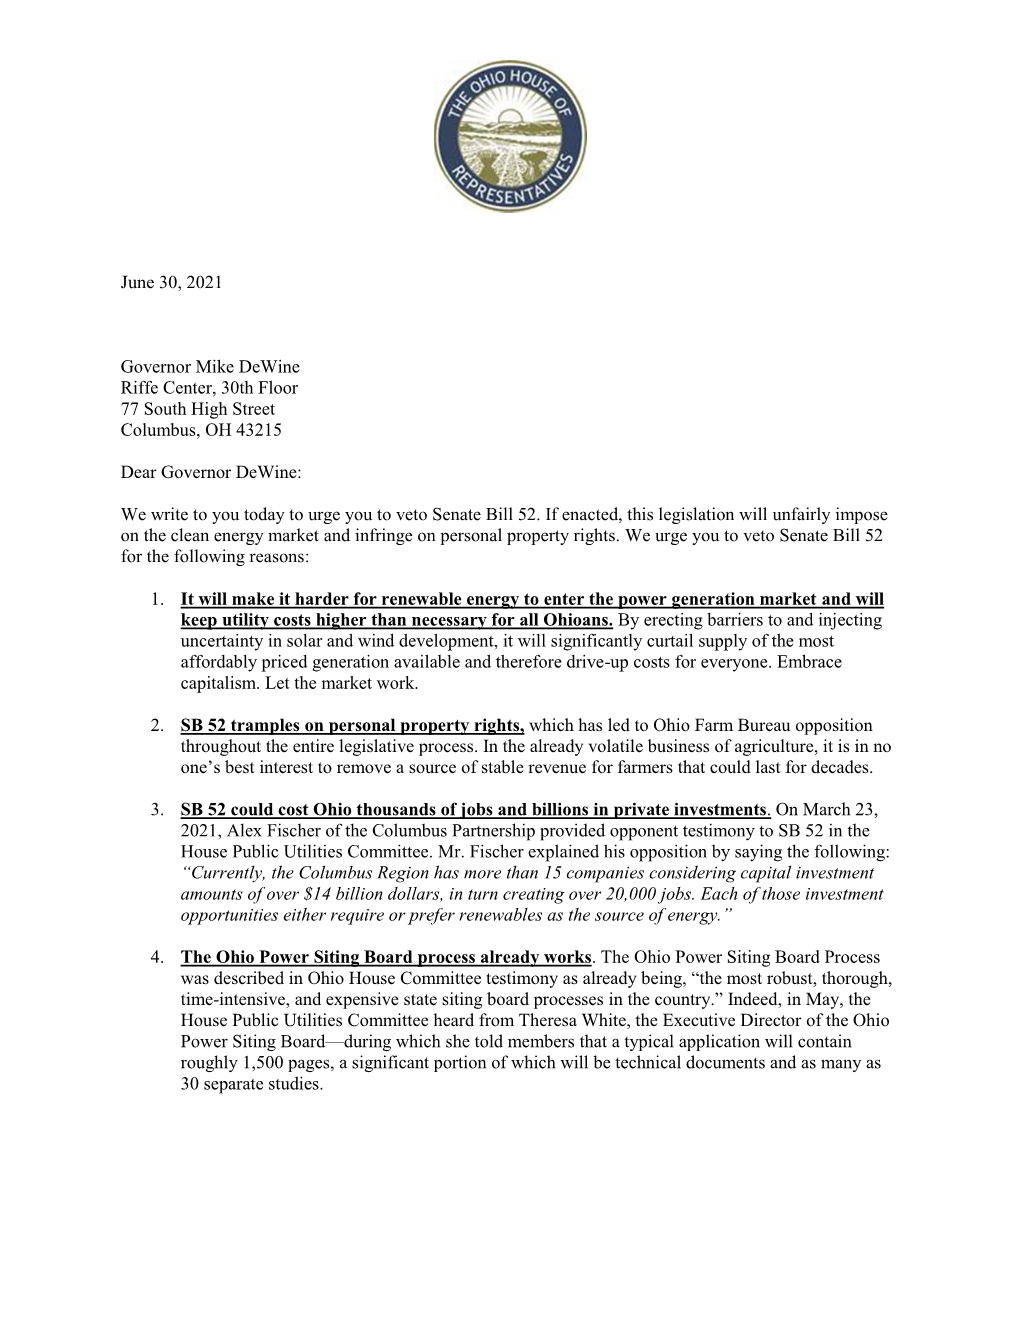 Sent a Letter Urging Gov. Dewine to Veto Senate Bill (SB) 52